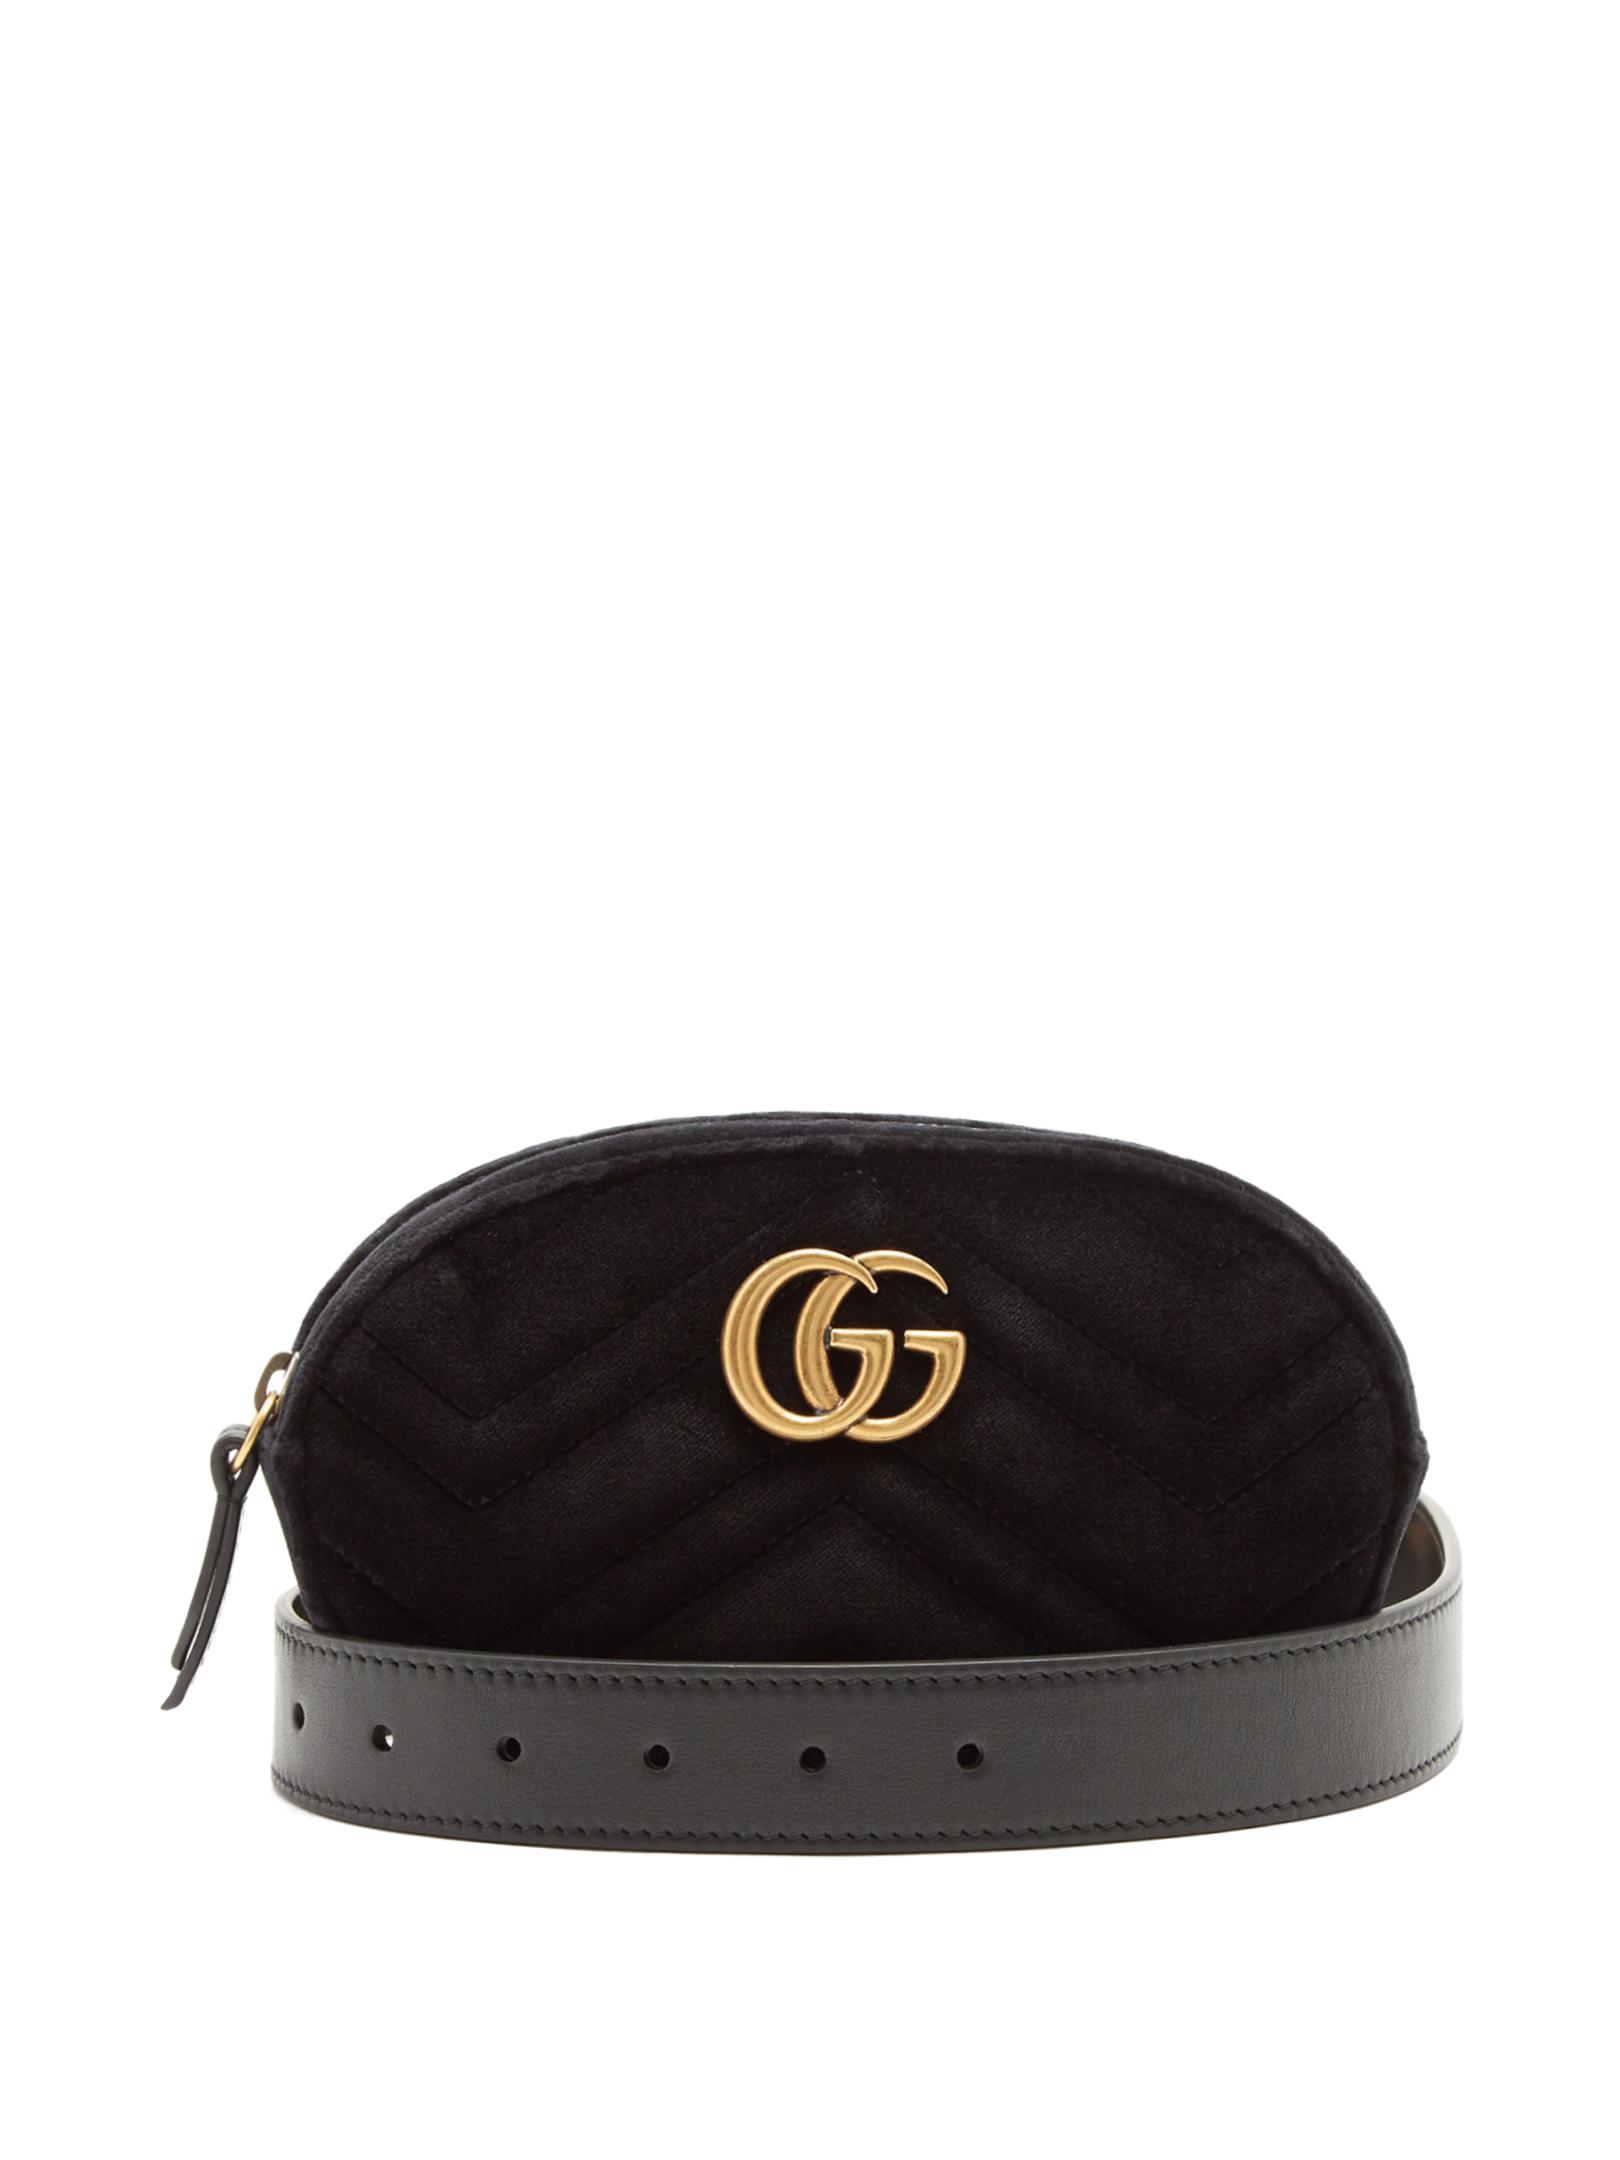 Gucci Gg Marmont Quilted-velvet Belt Bag in Black - Lyst